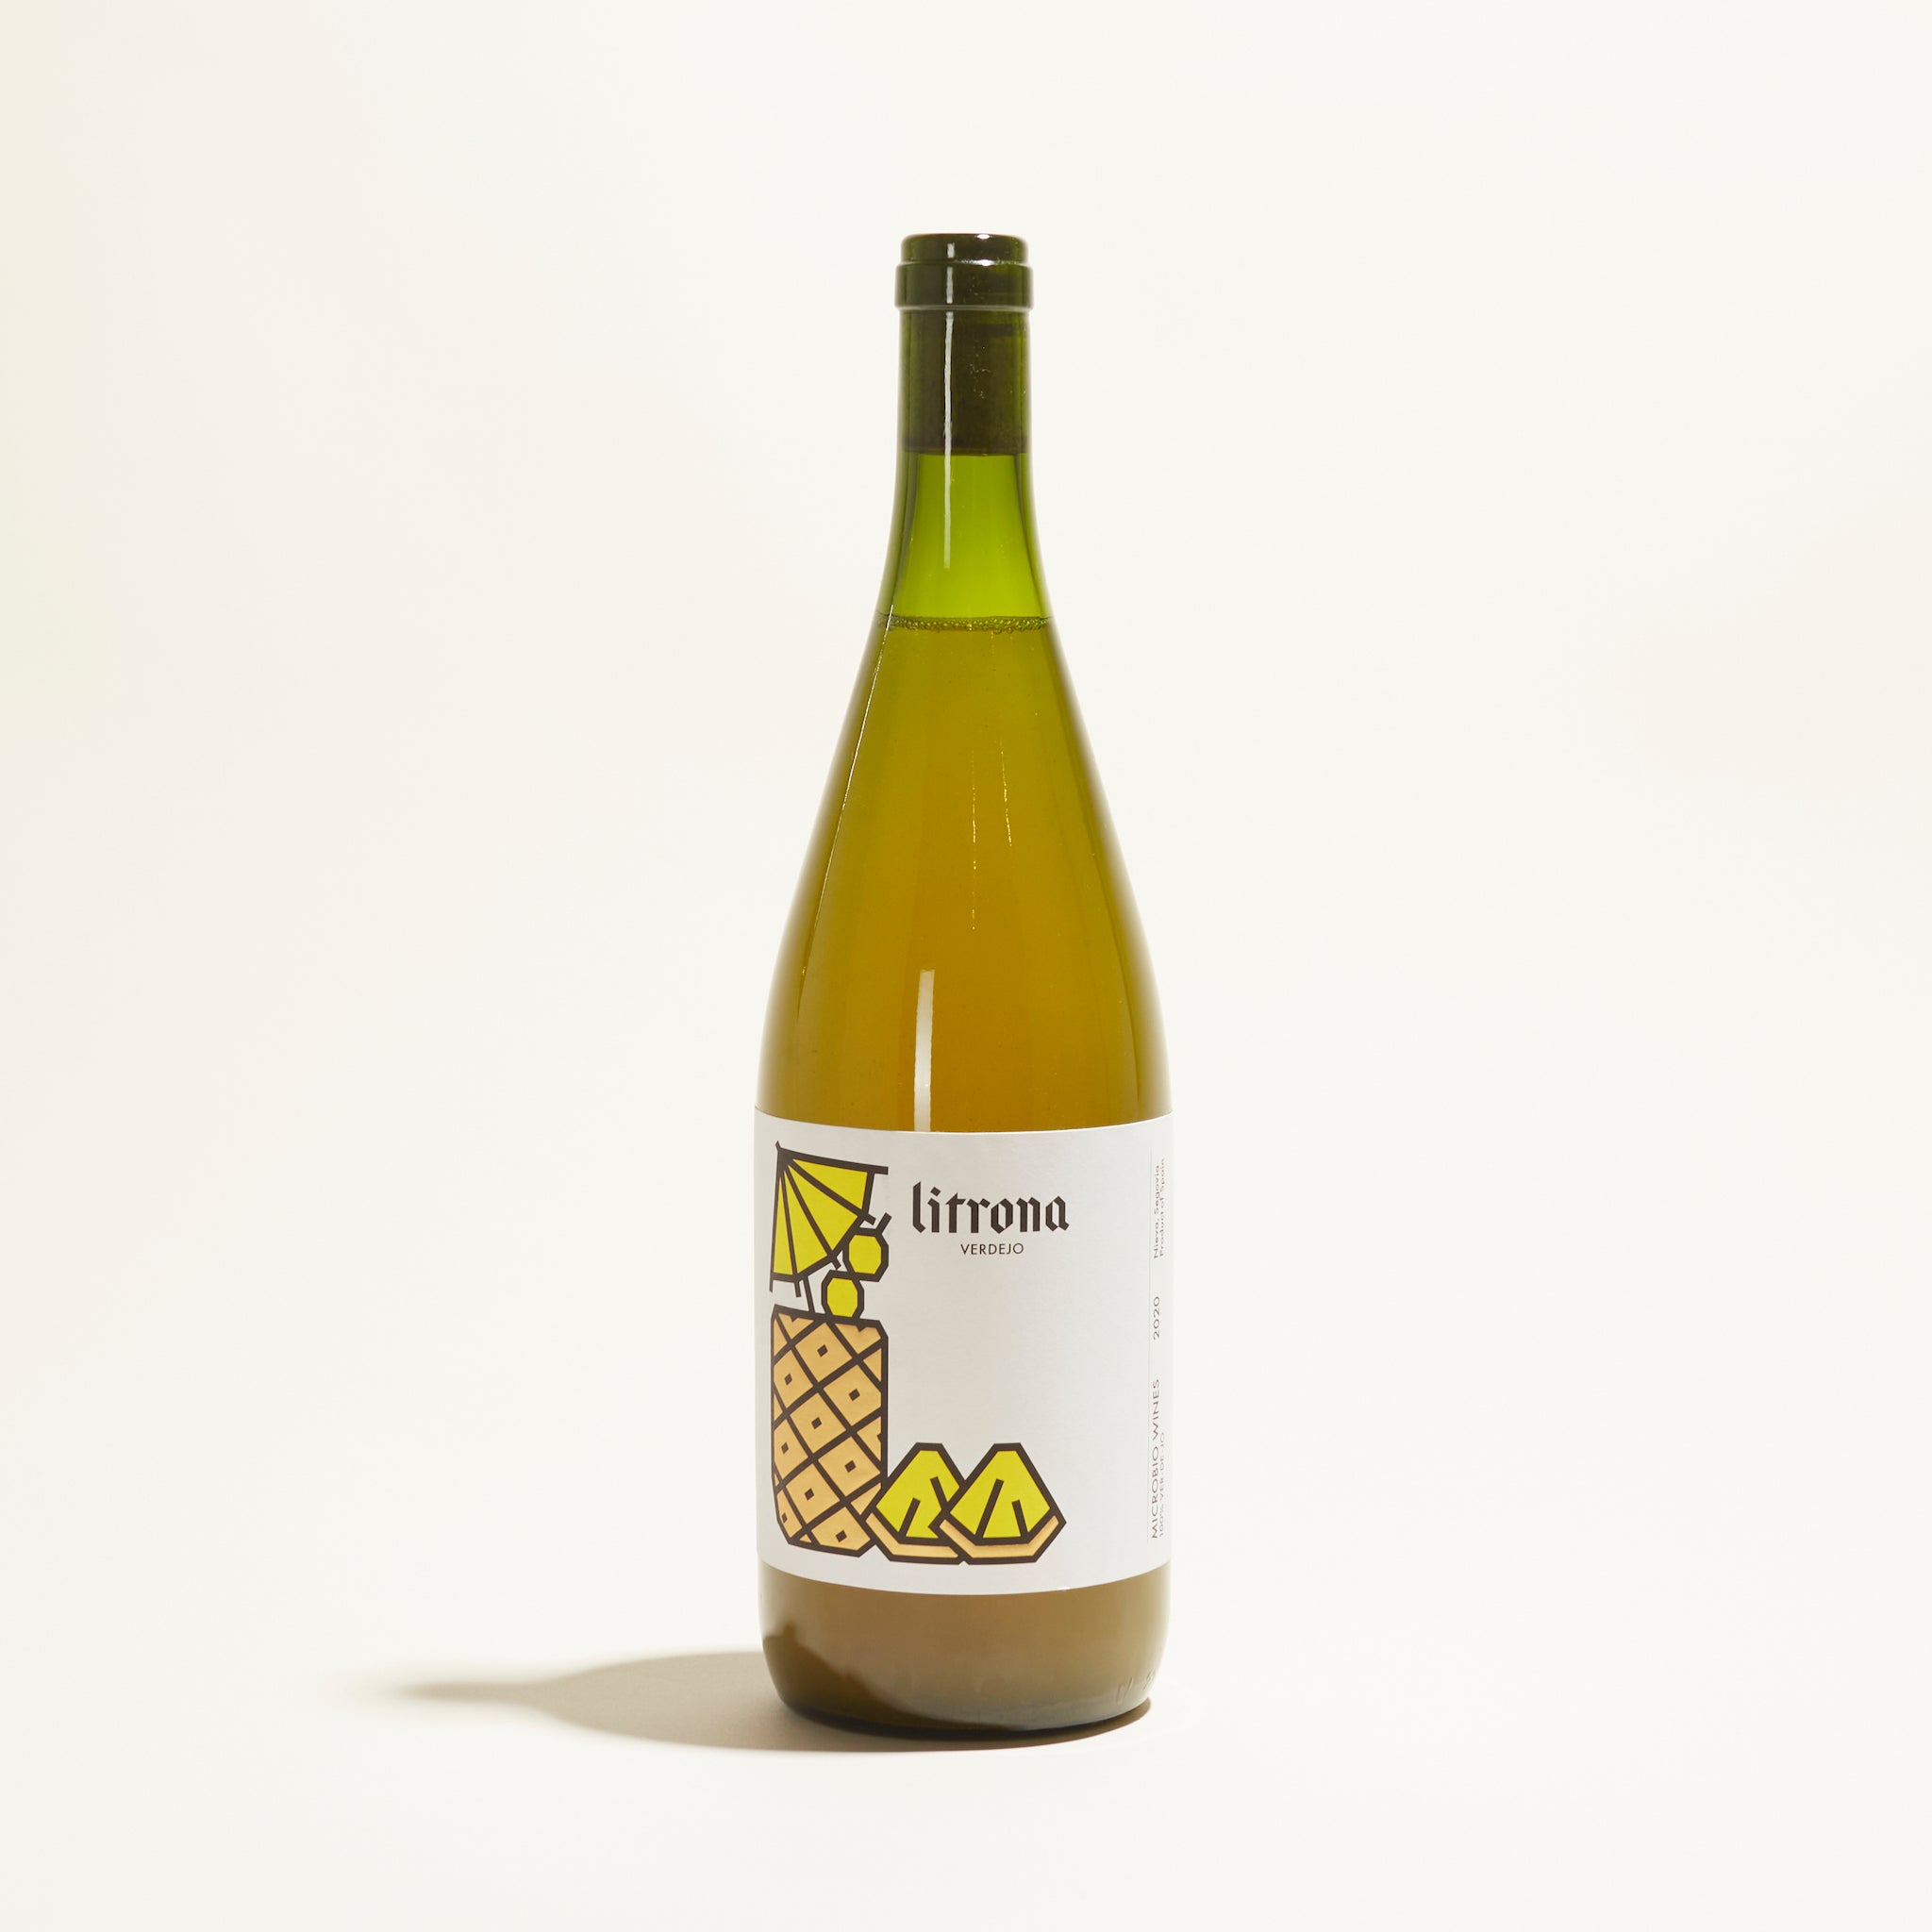 verdejo litrona natural white wine catalunya spain front